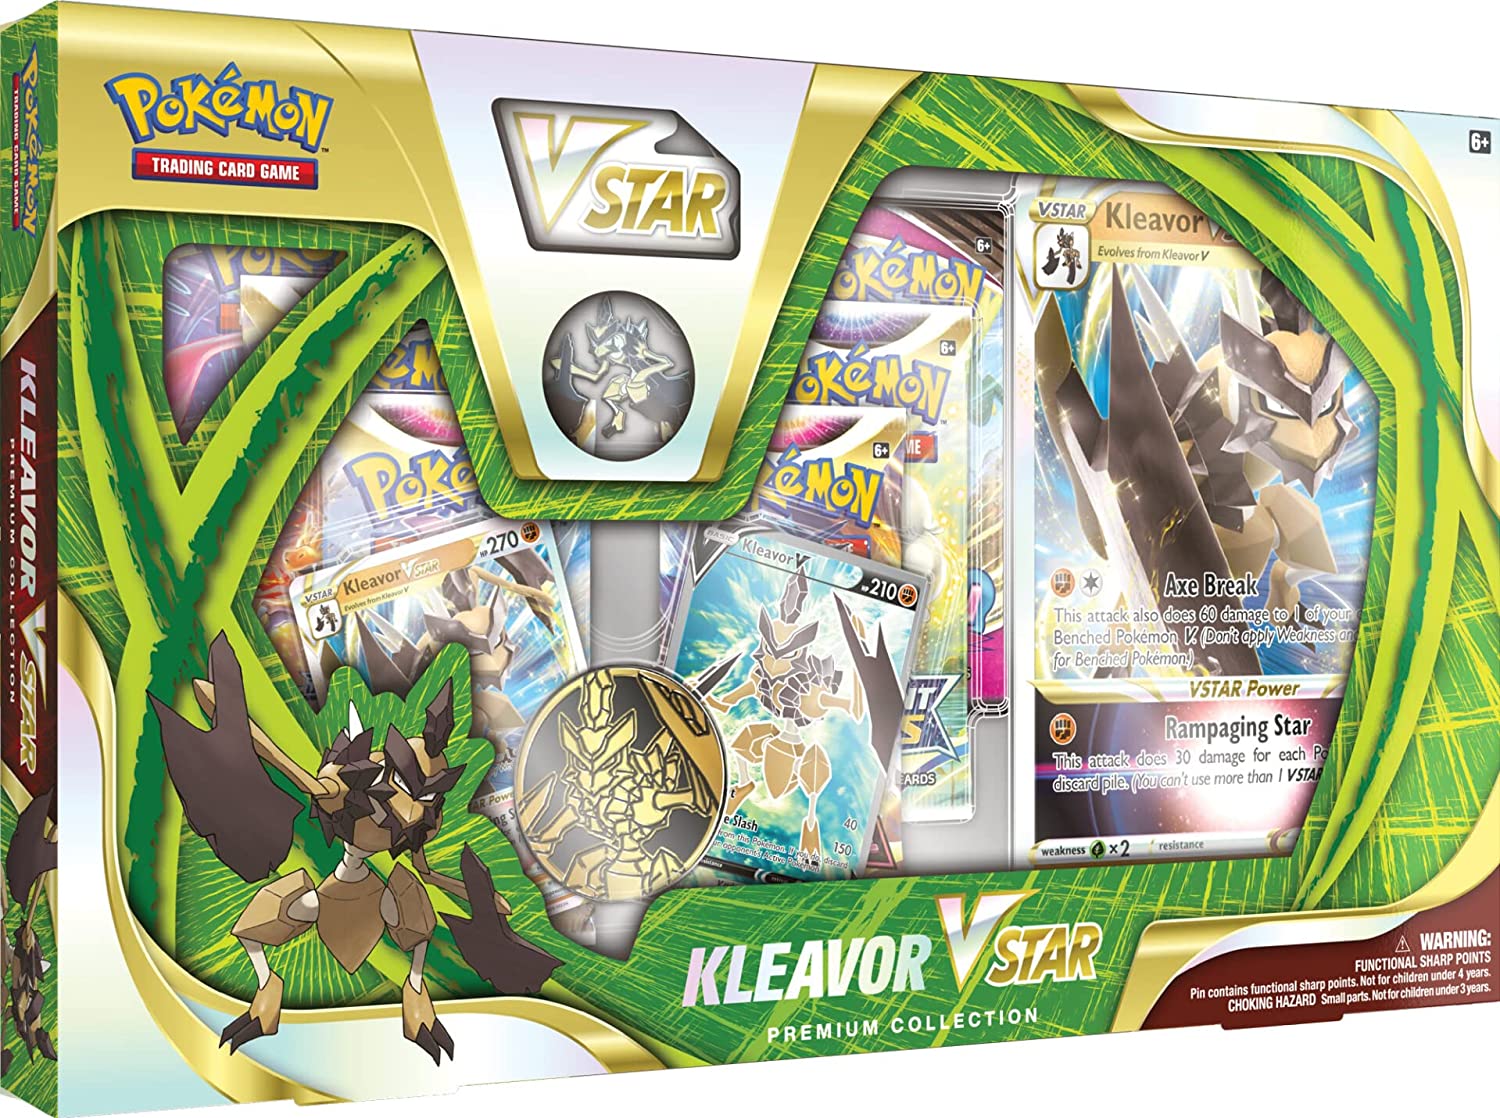 Pokémon TCG Kleavor V Star Premium Collection Box